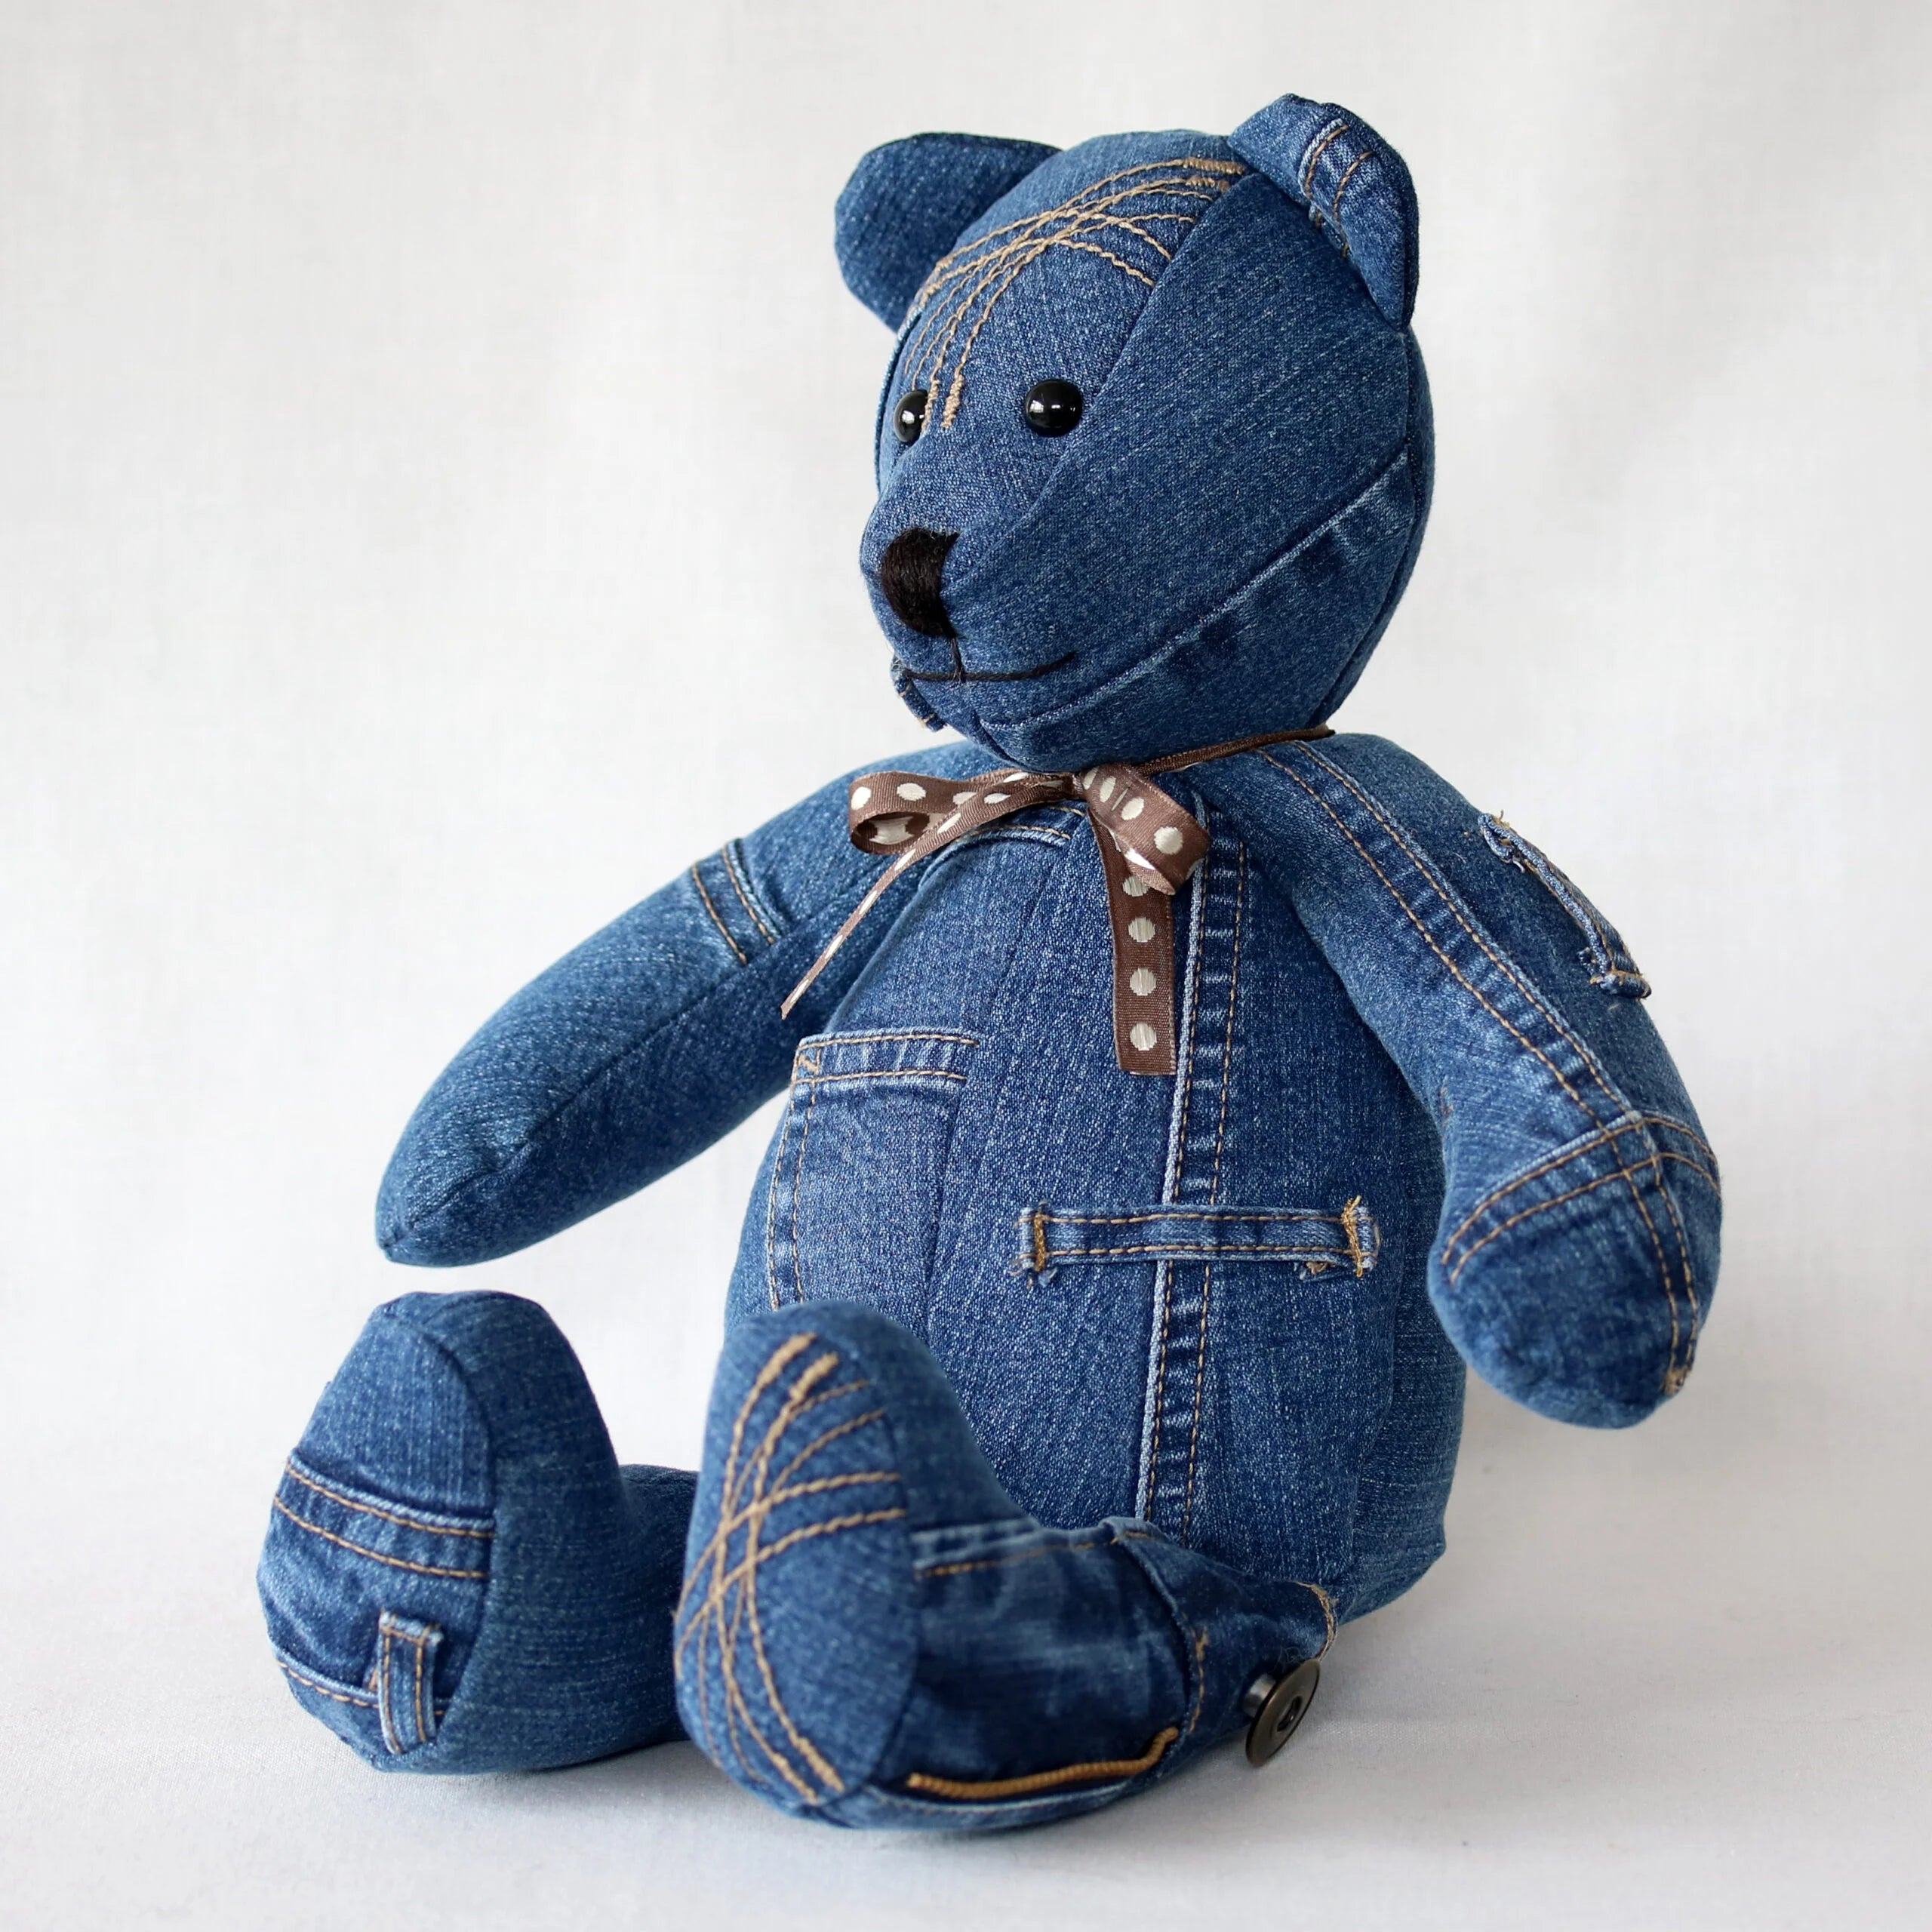 Jean Bear Jnr The Handmade Bear from Canterbury Bears.